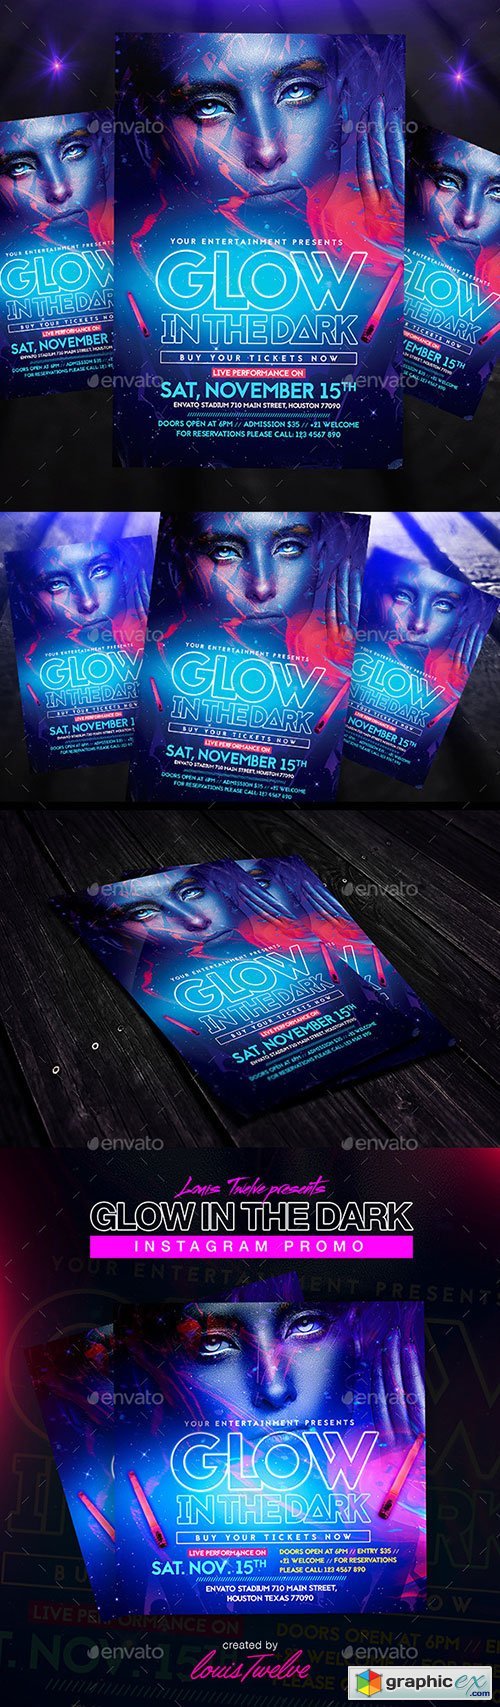 Glow in the Dark | Flyer + Instagram Promo